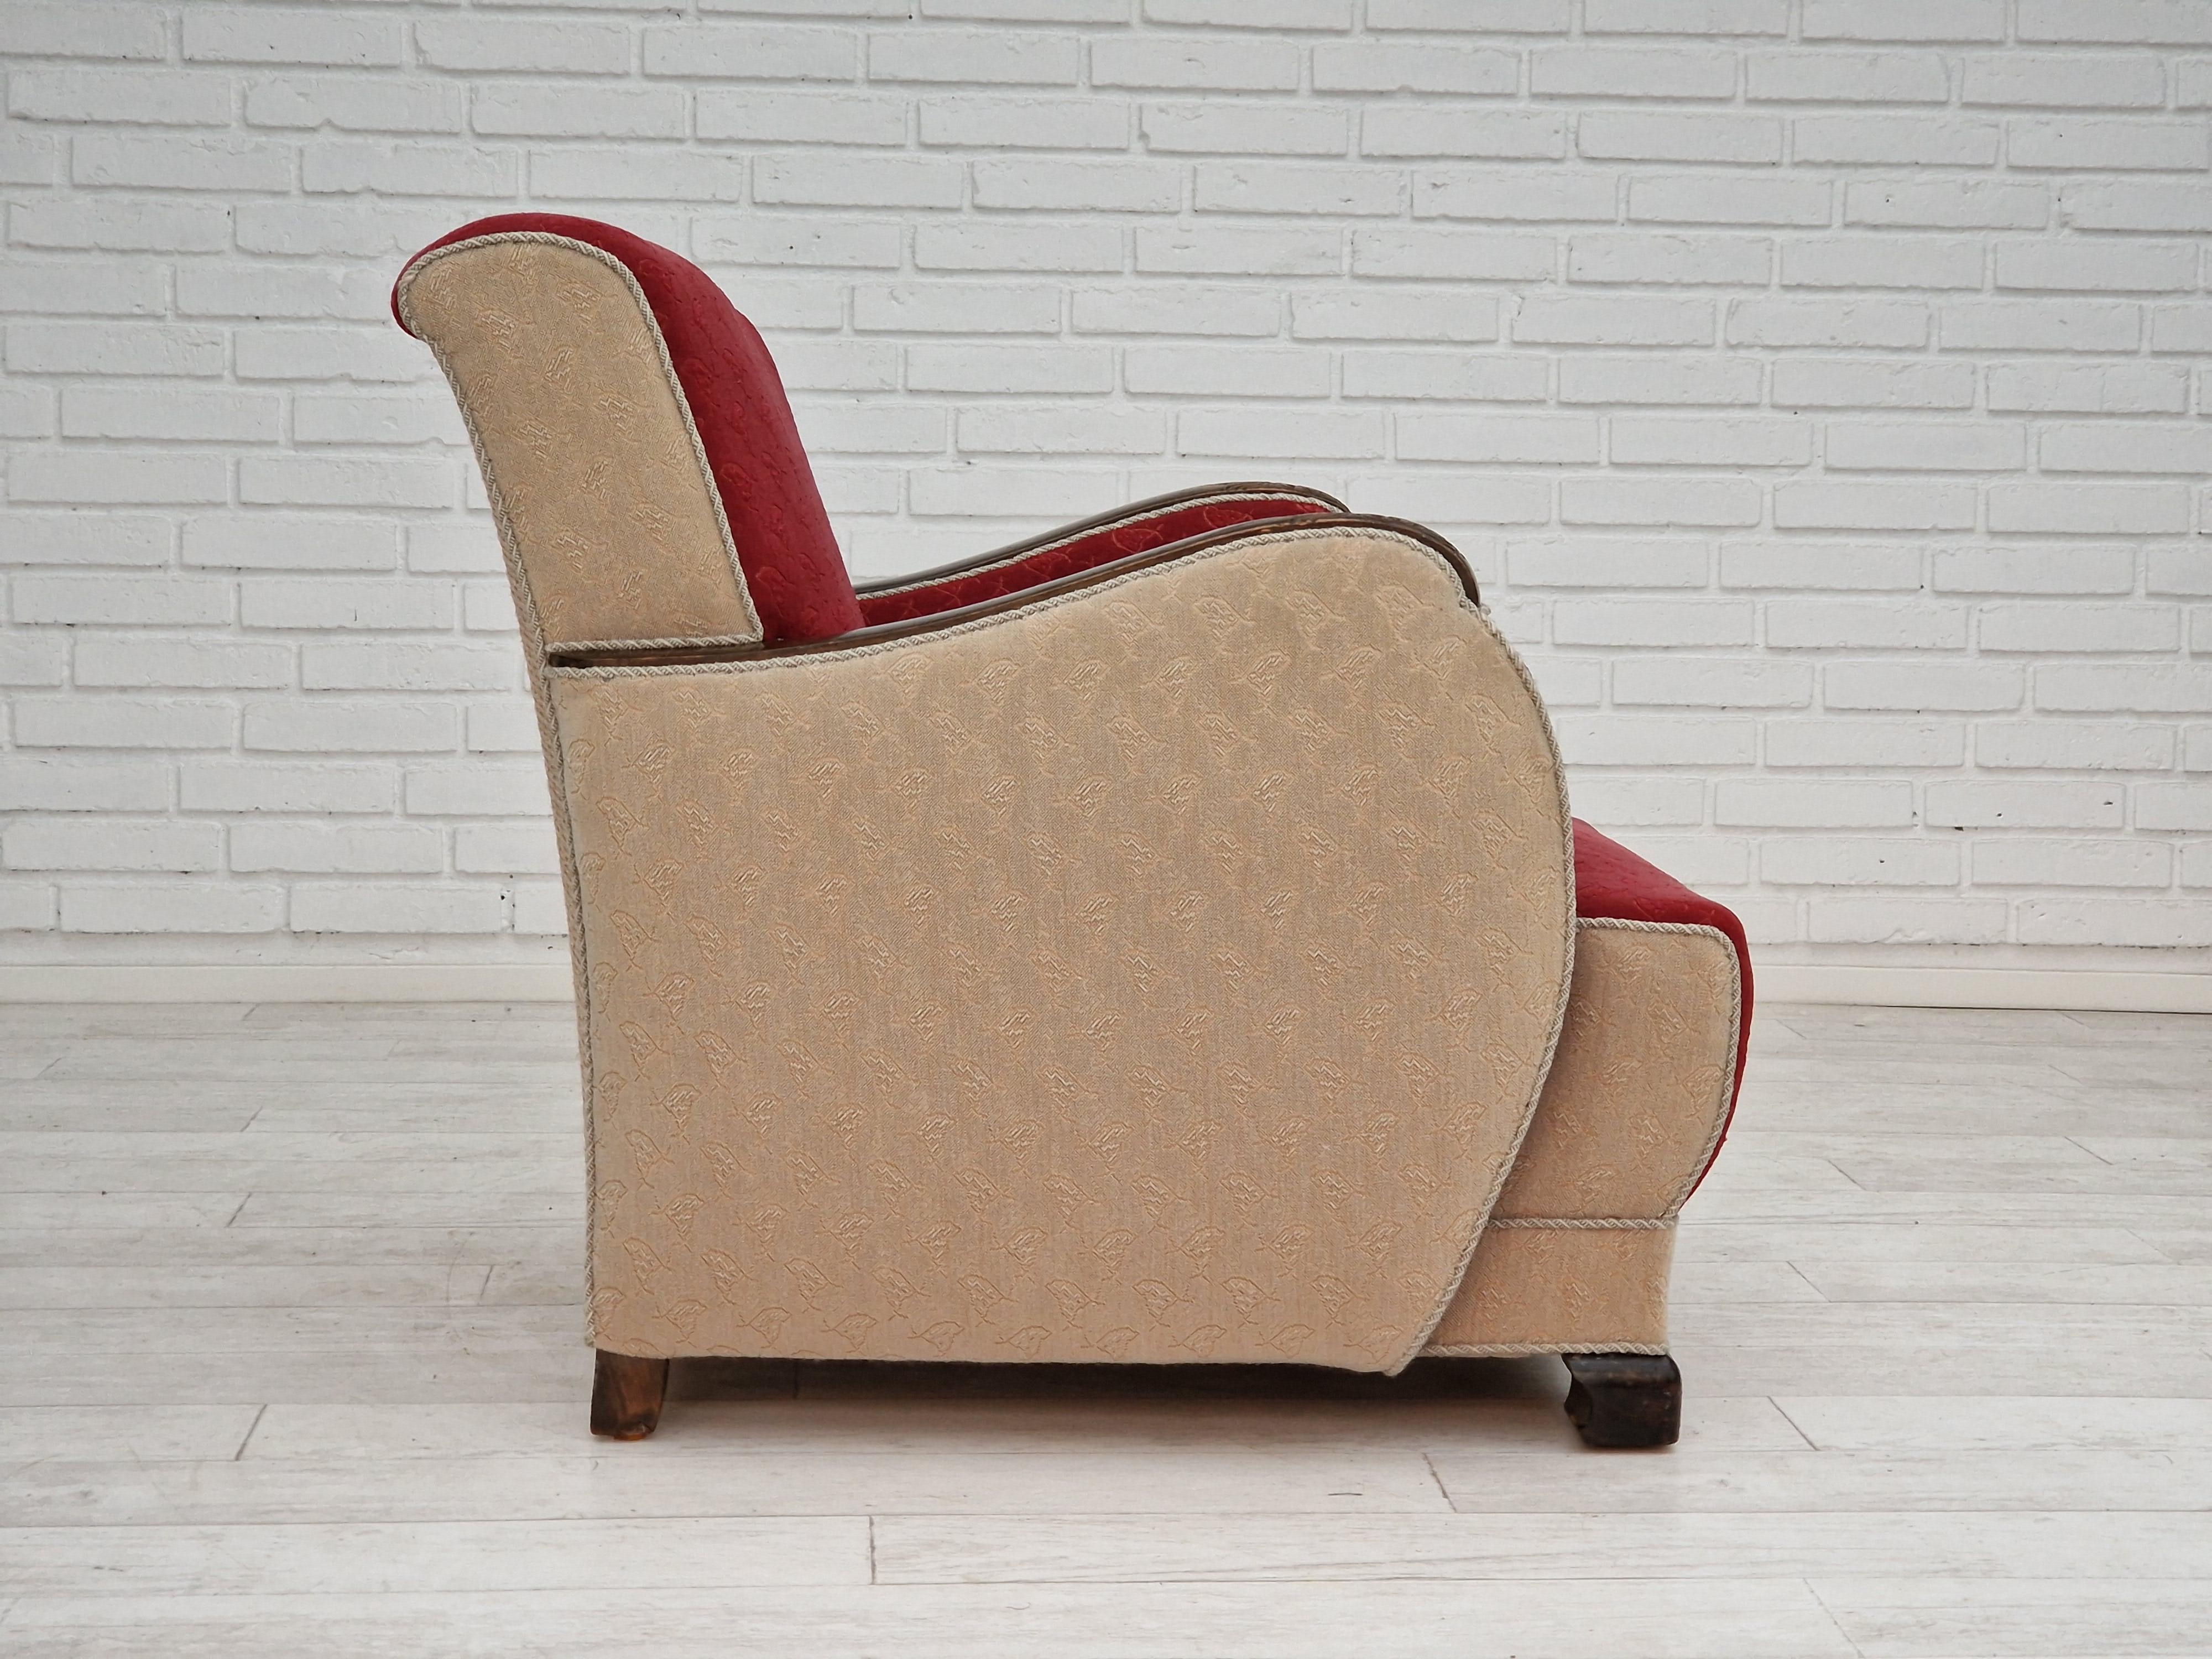 1950s, Scandinavian Art Deco Chairs, Original Condition For Sale 10